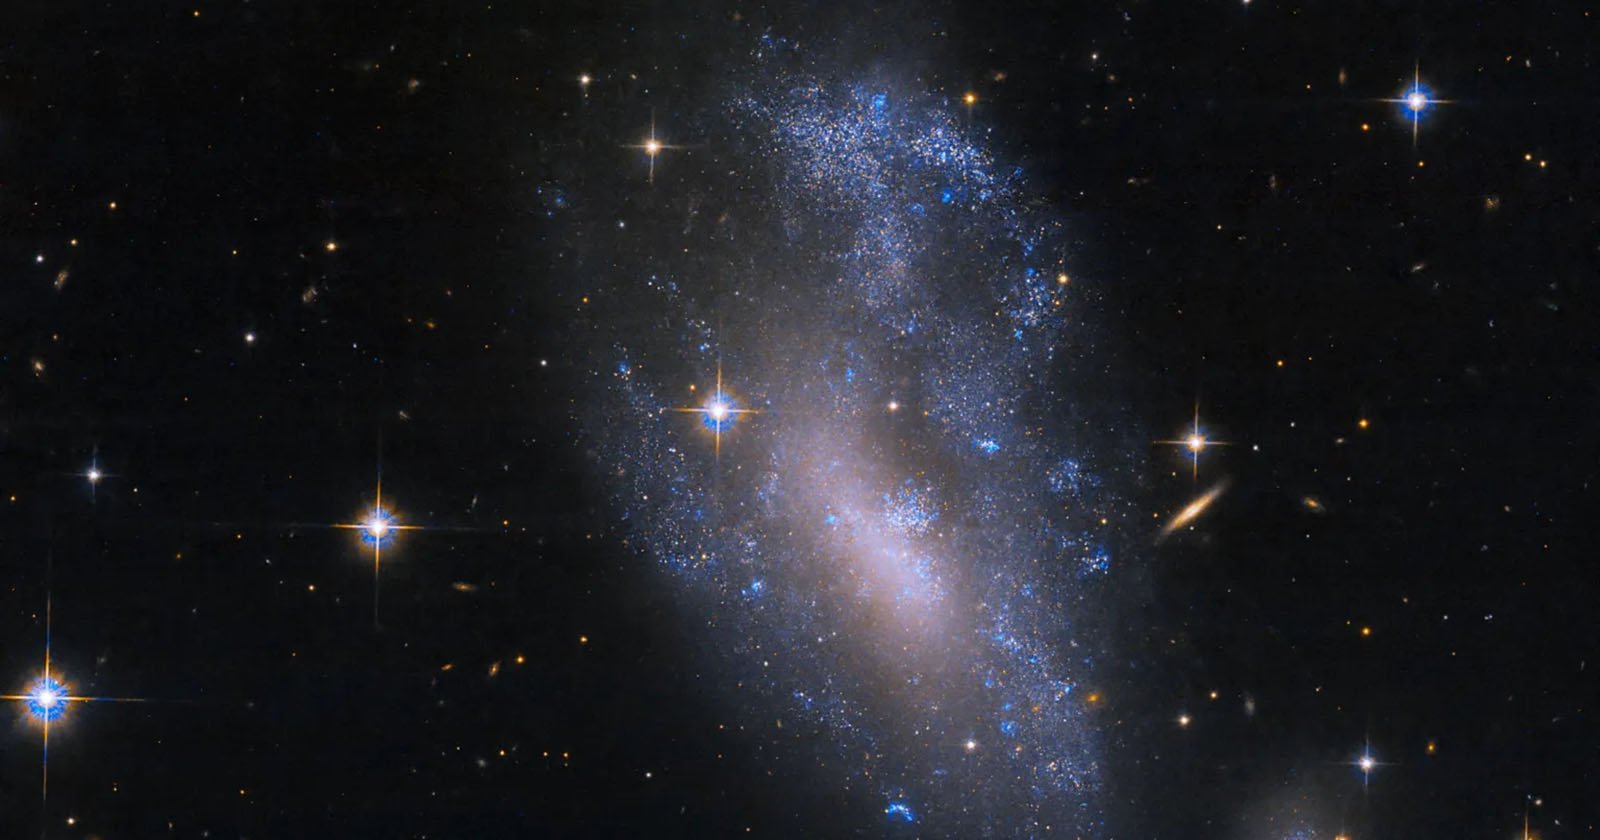  galactic interaction smushed spiral galaxy 